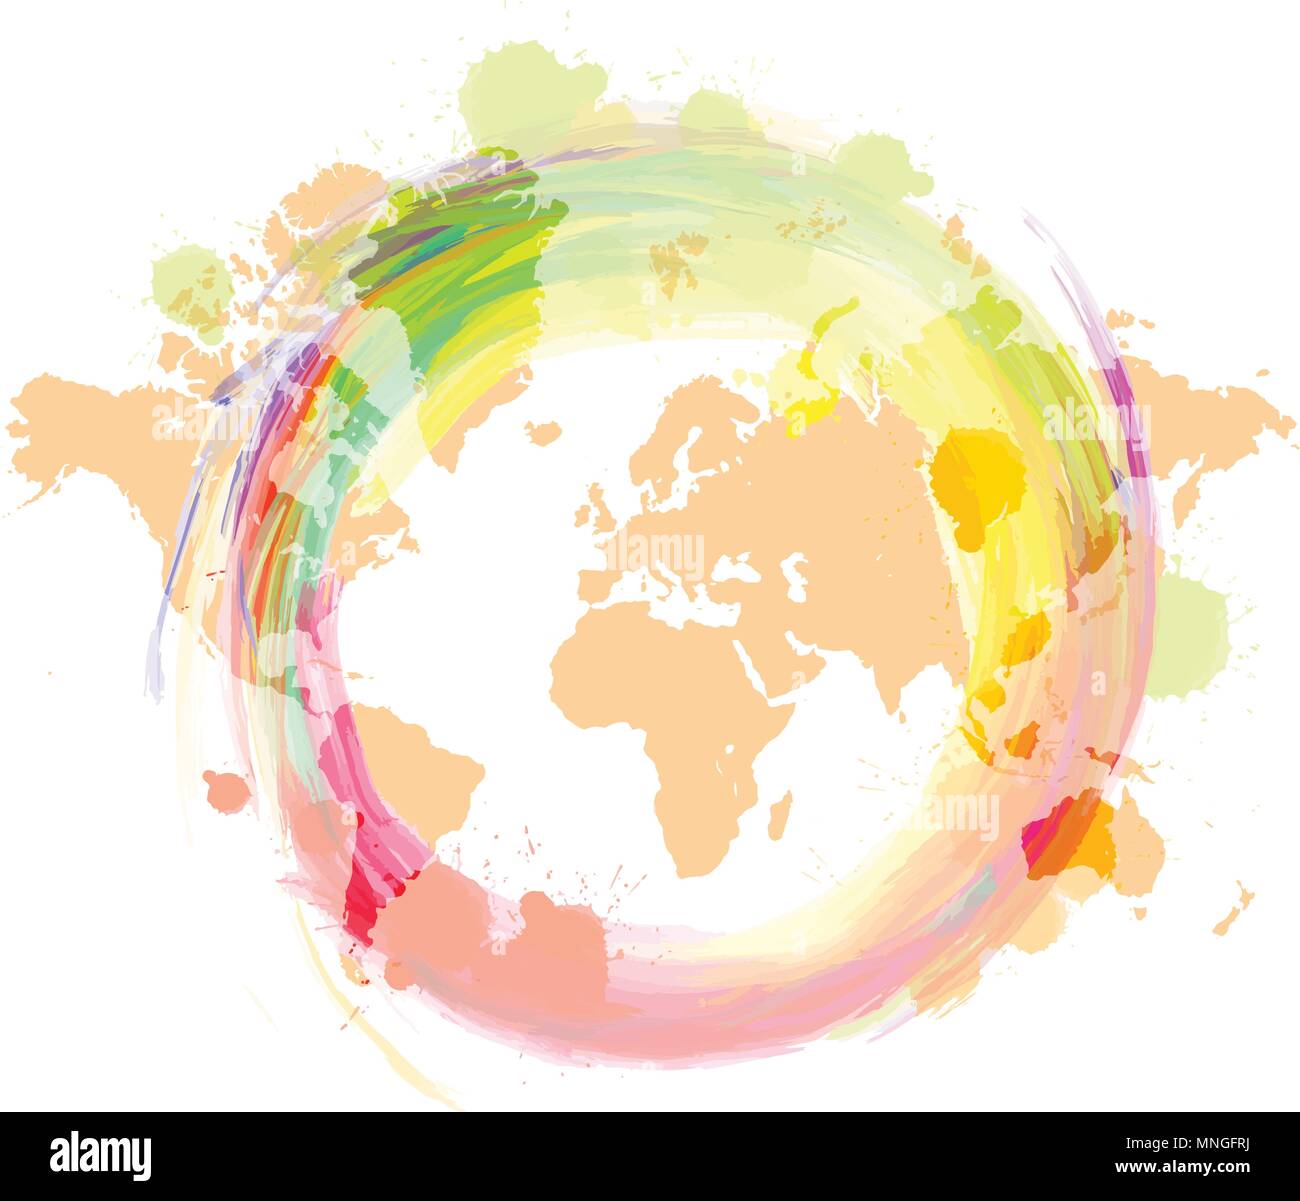 Weltkarte mit bunten slatter Hintergrund, Vector Illustration Stock Vektor